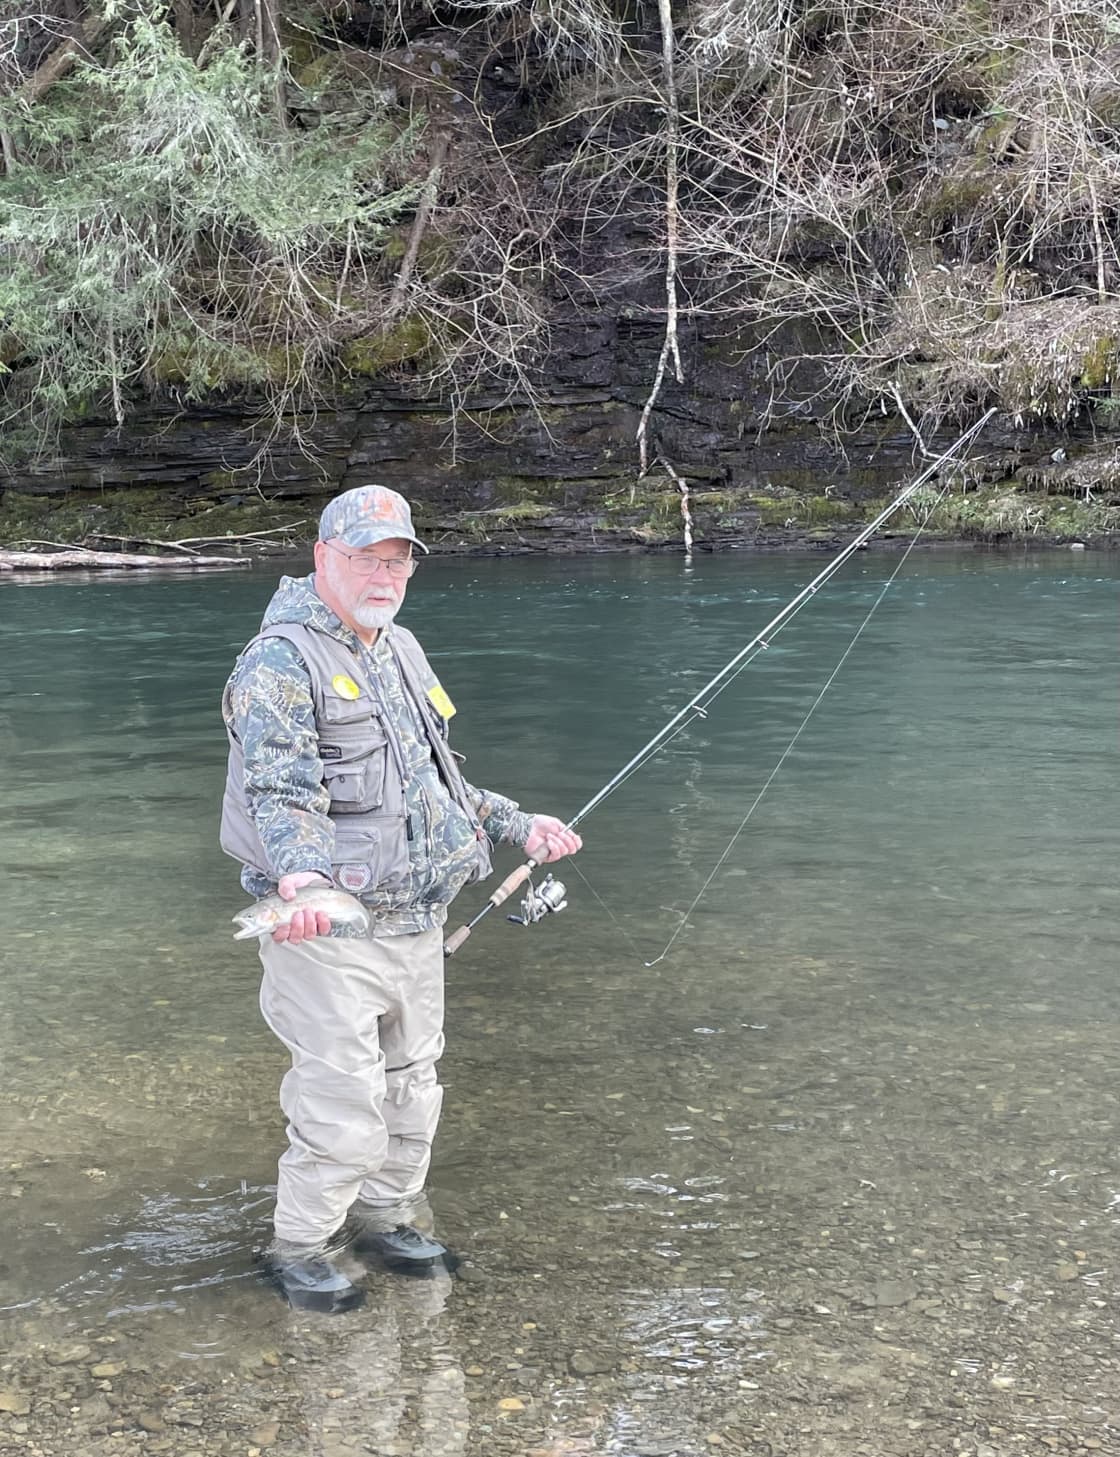 Fishing in Pine Creek 1/4 down stream